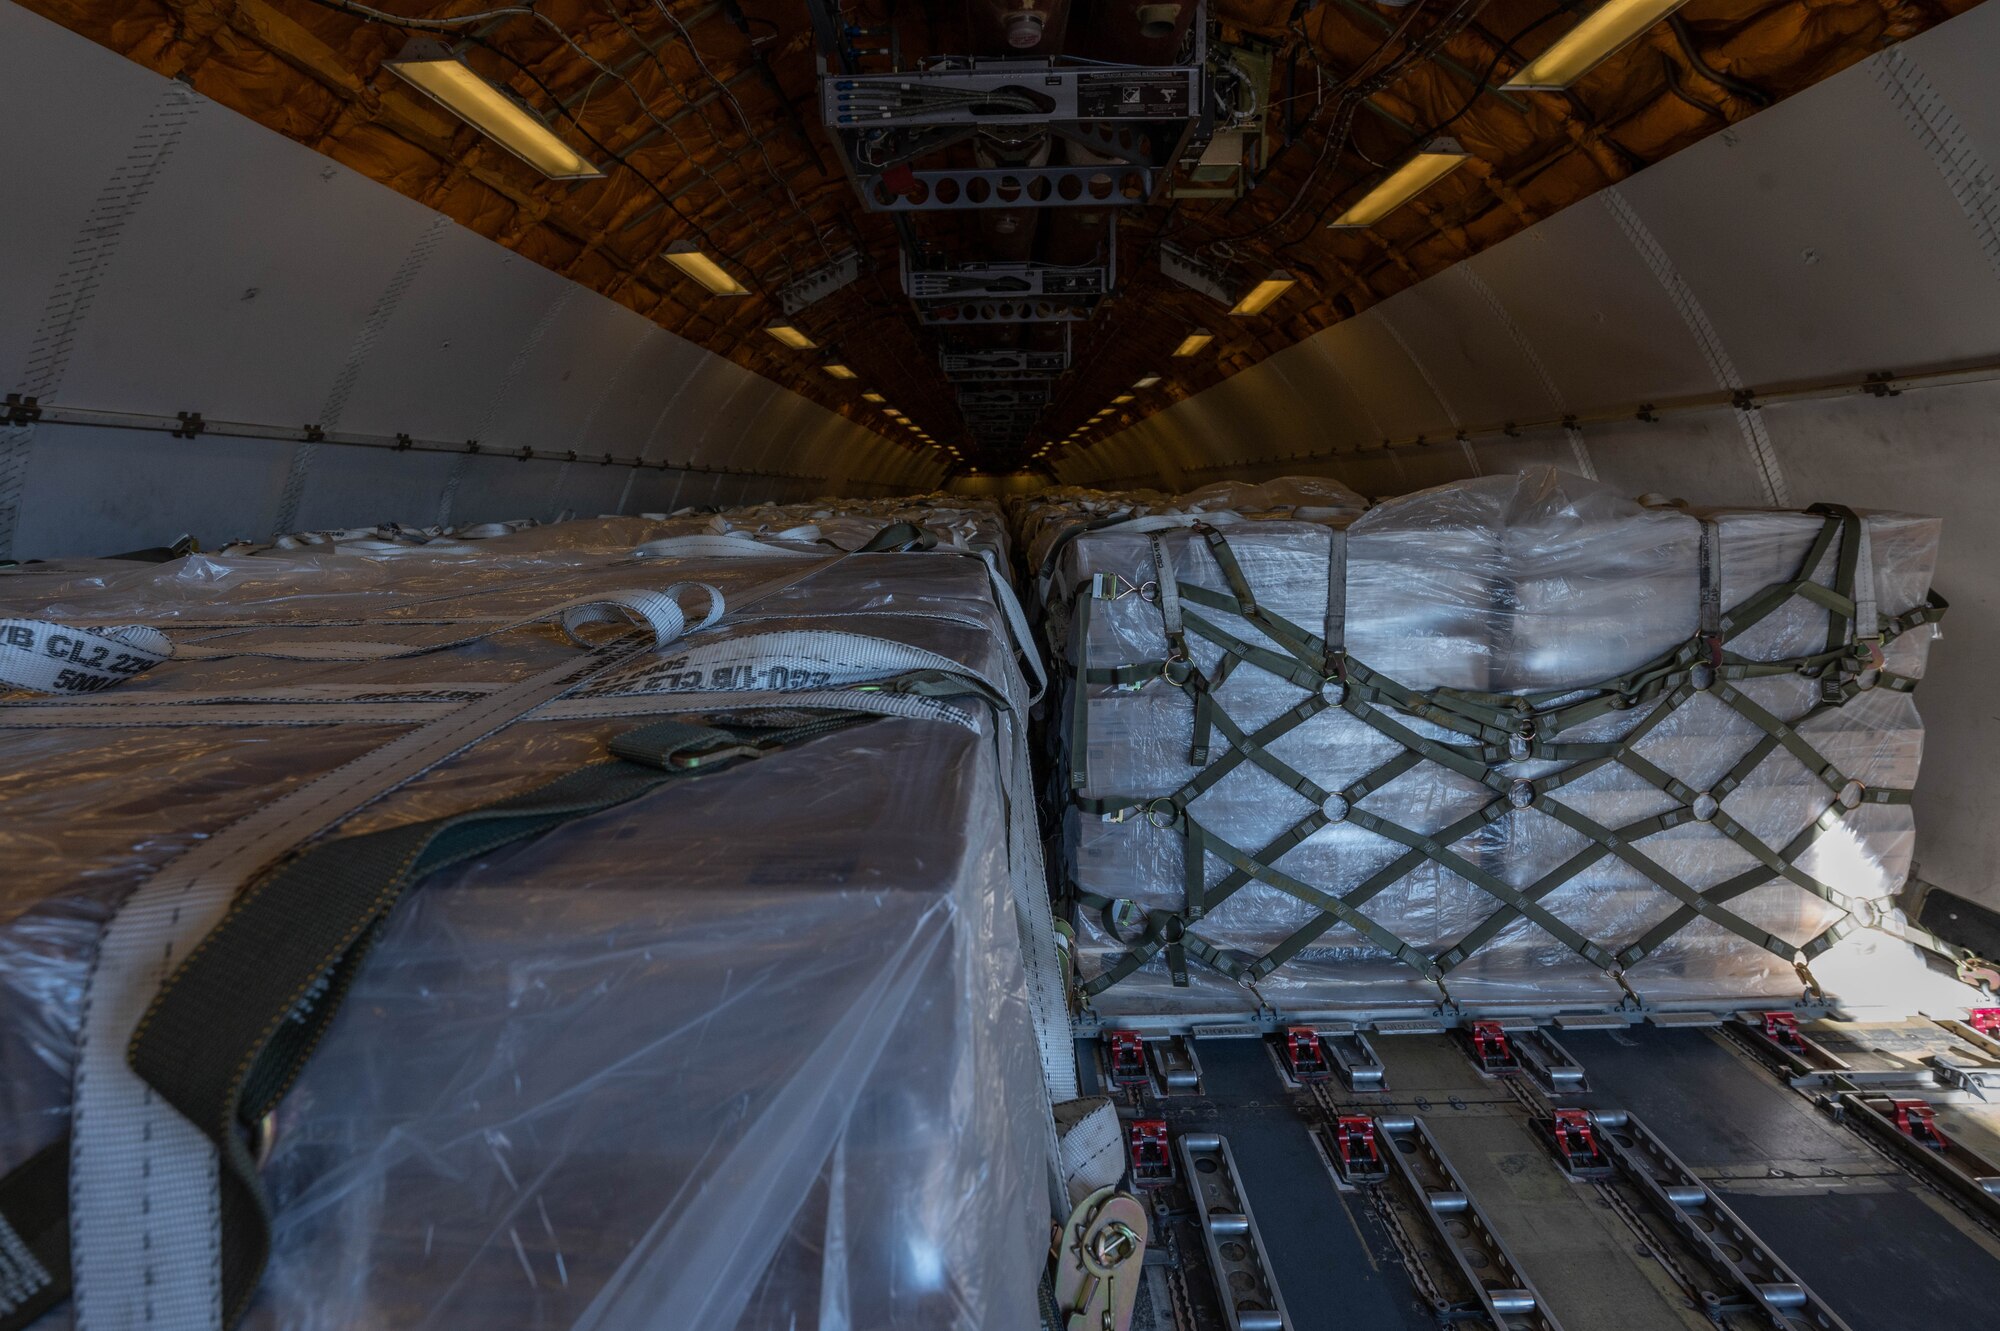 Pallets of infant formula sit inside a commercial aircraft.